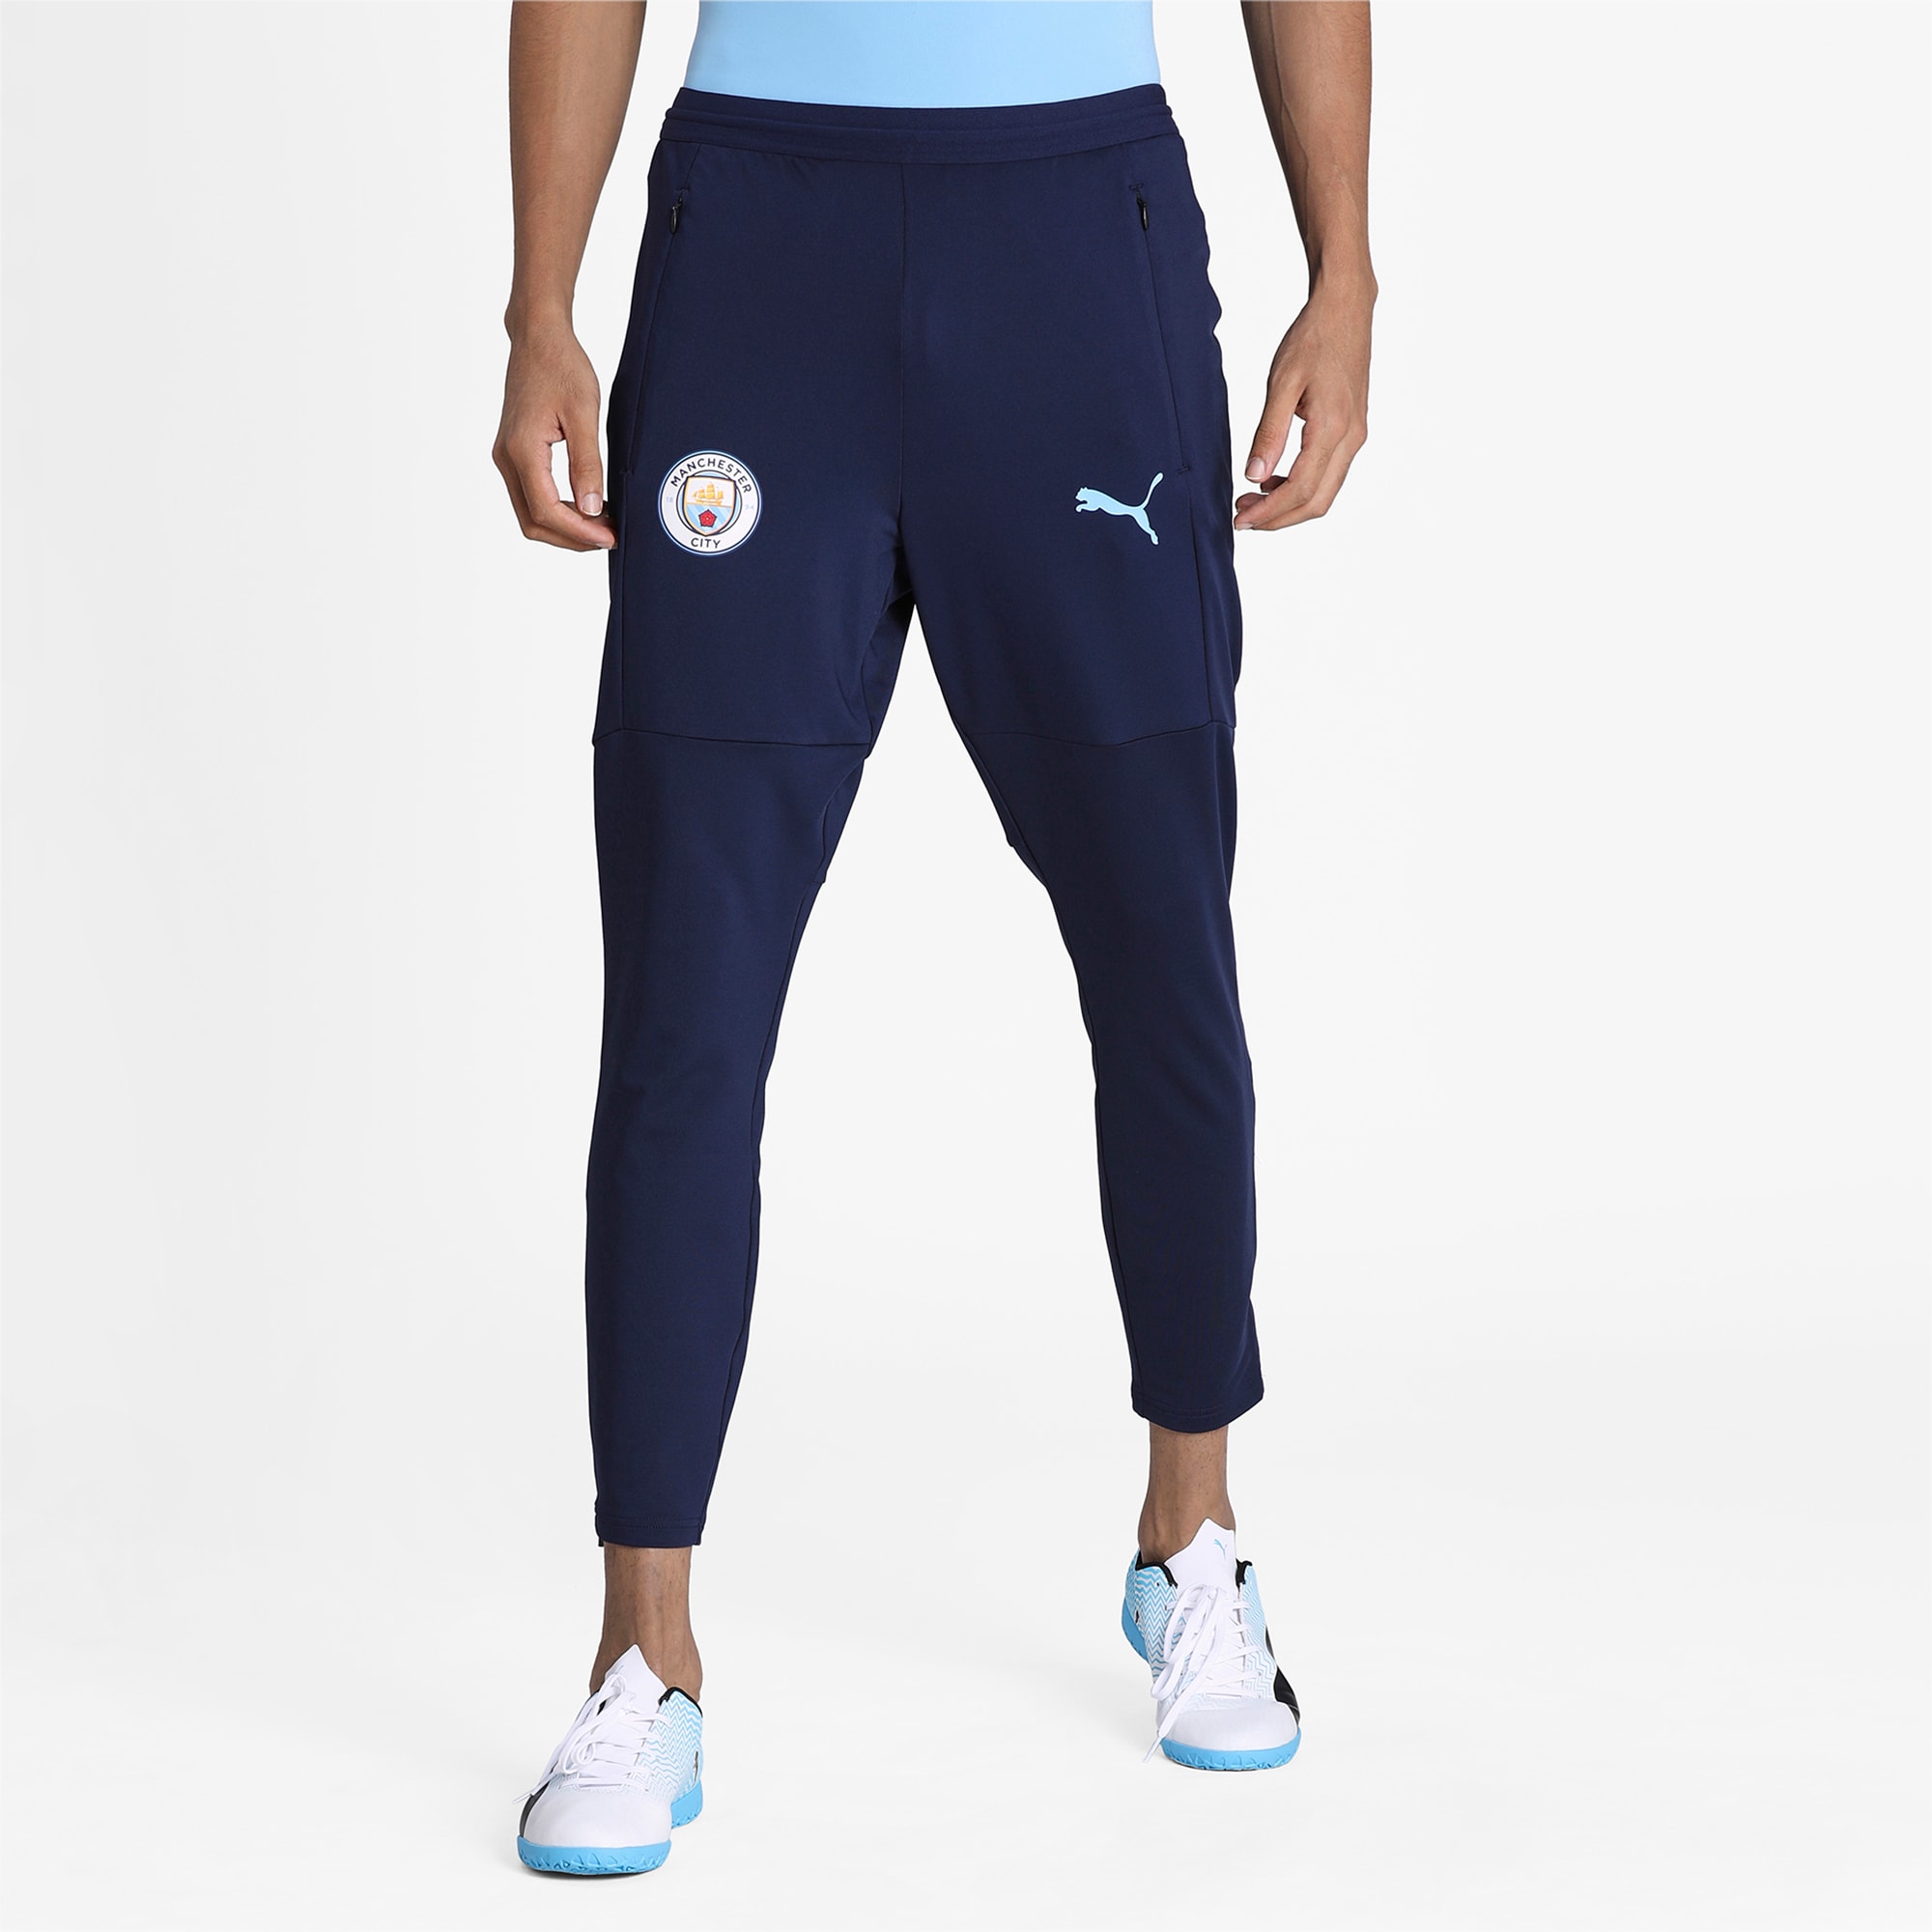 Manchester City Pantalones Training fit Colección Oficial Talla de Hombre